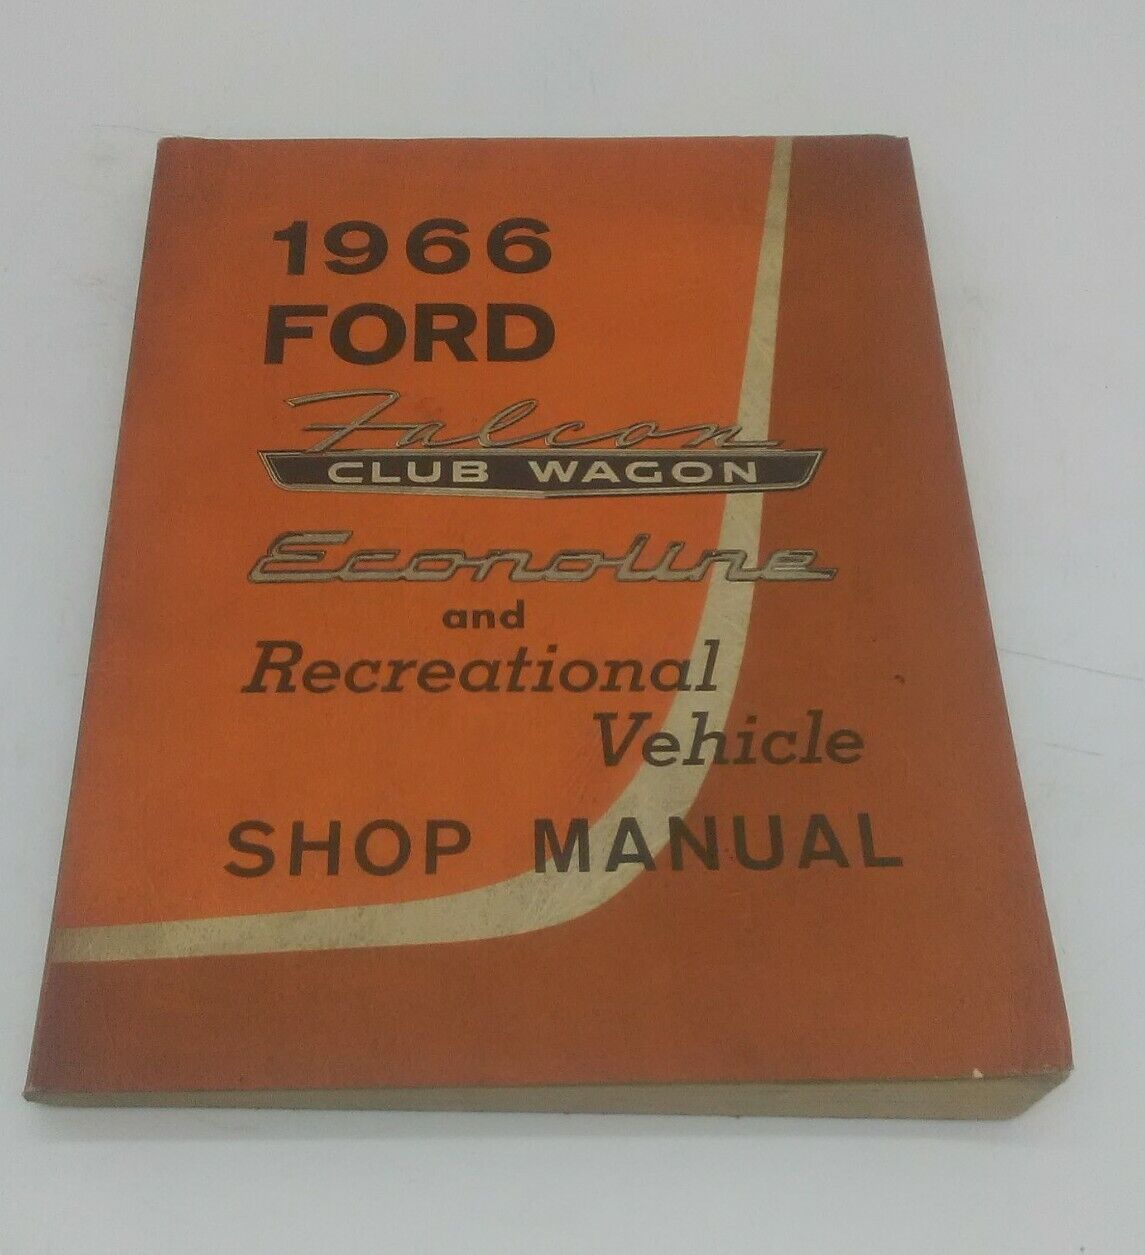 Original 1966 Ford Shop Manual Book Econoline Falcon Club Wagon Pickup Van.  OEM